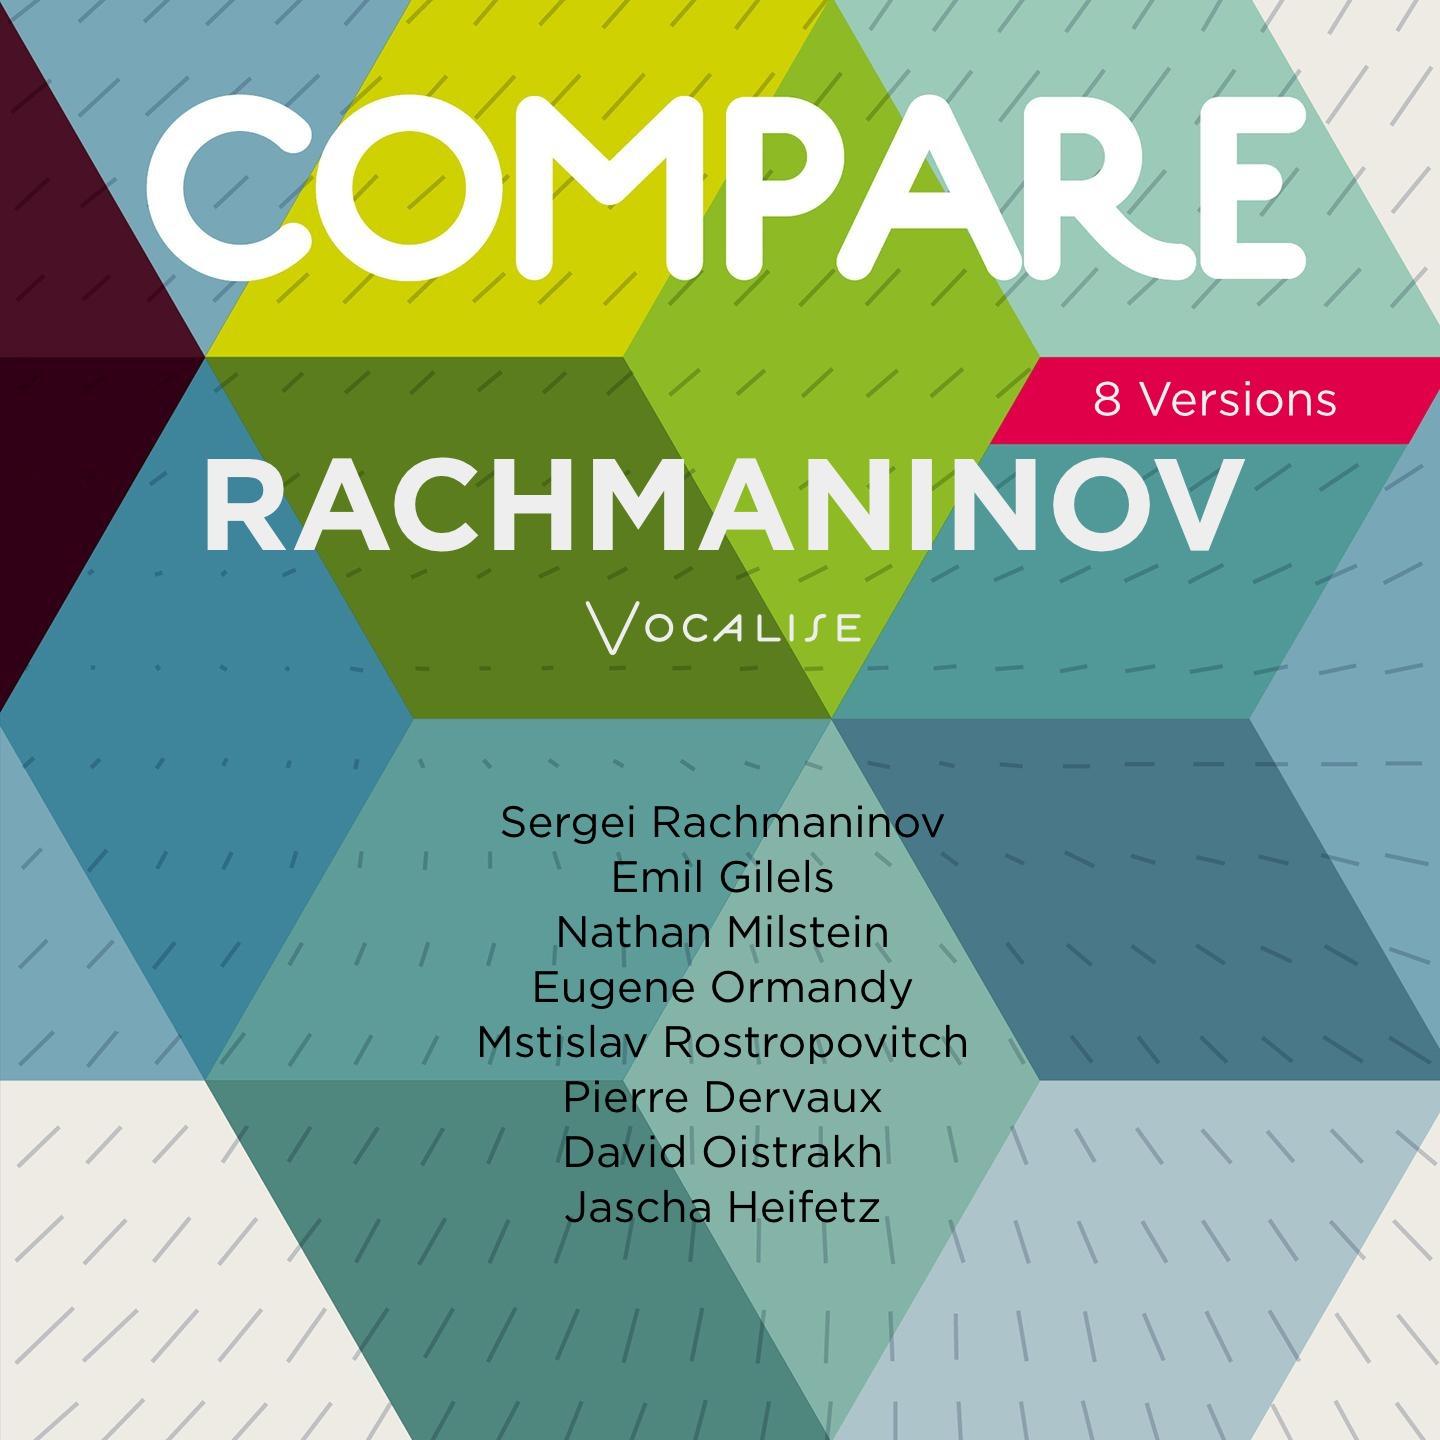 Rachmaninoff: Vocalise, Rachmaninoff vs. Gilels vs. Milstein vs. Ormandy vs. Rostropovitch vs. Dervaux vs. Oistrakh vs. Heifetz (Compare 8 Versions)